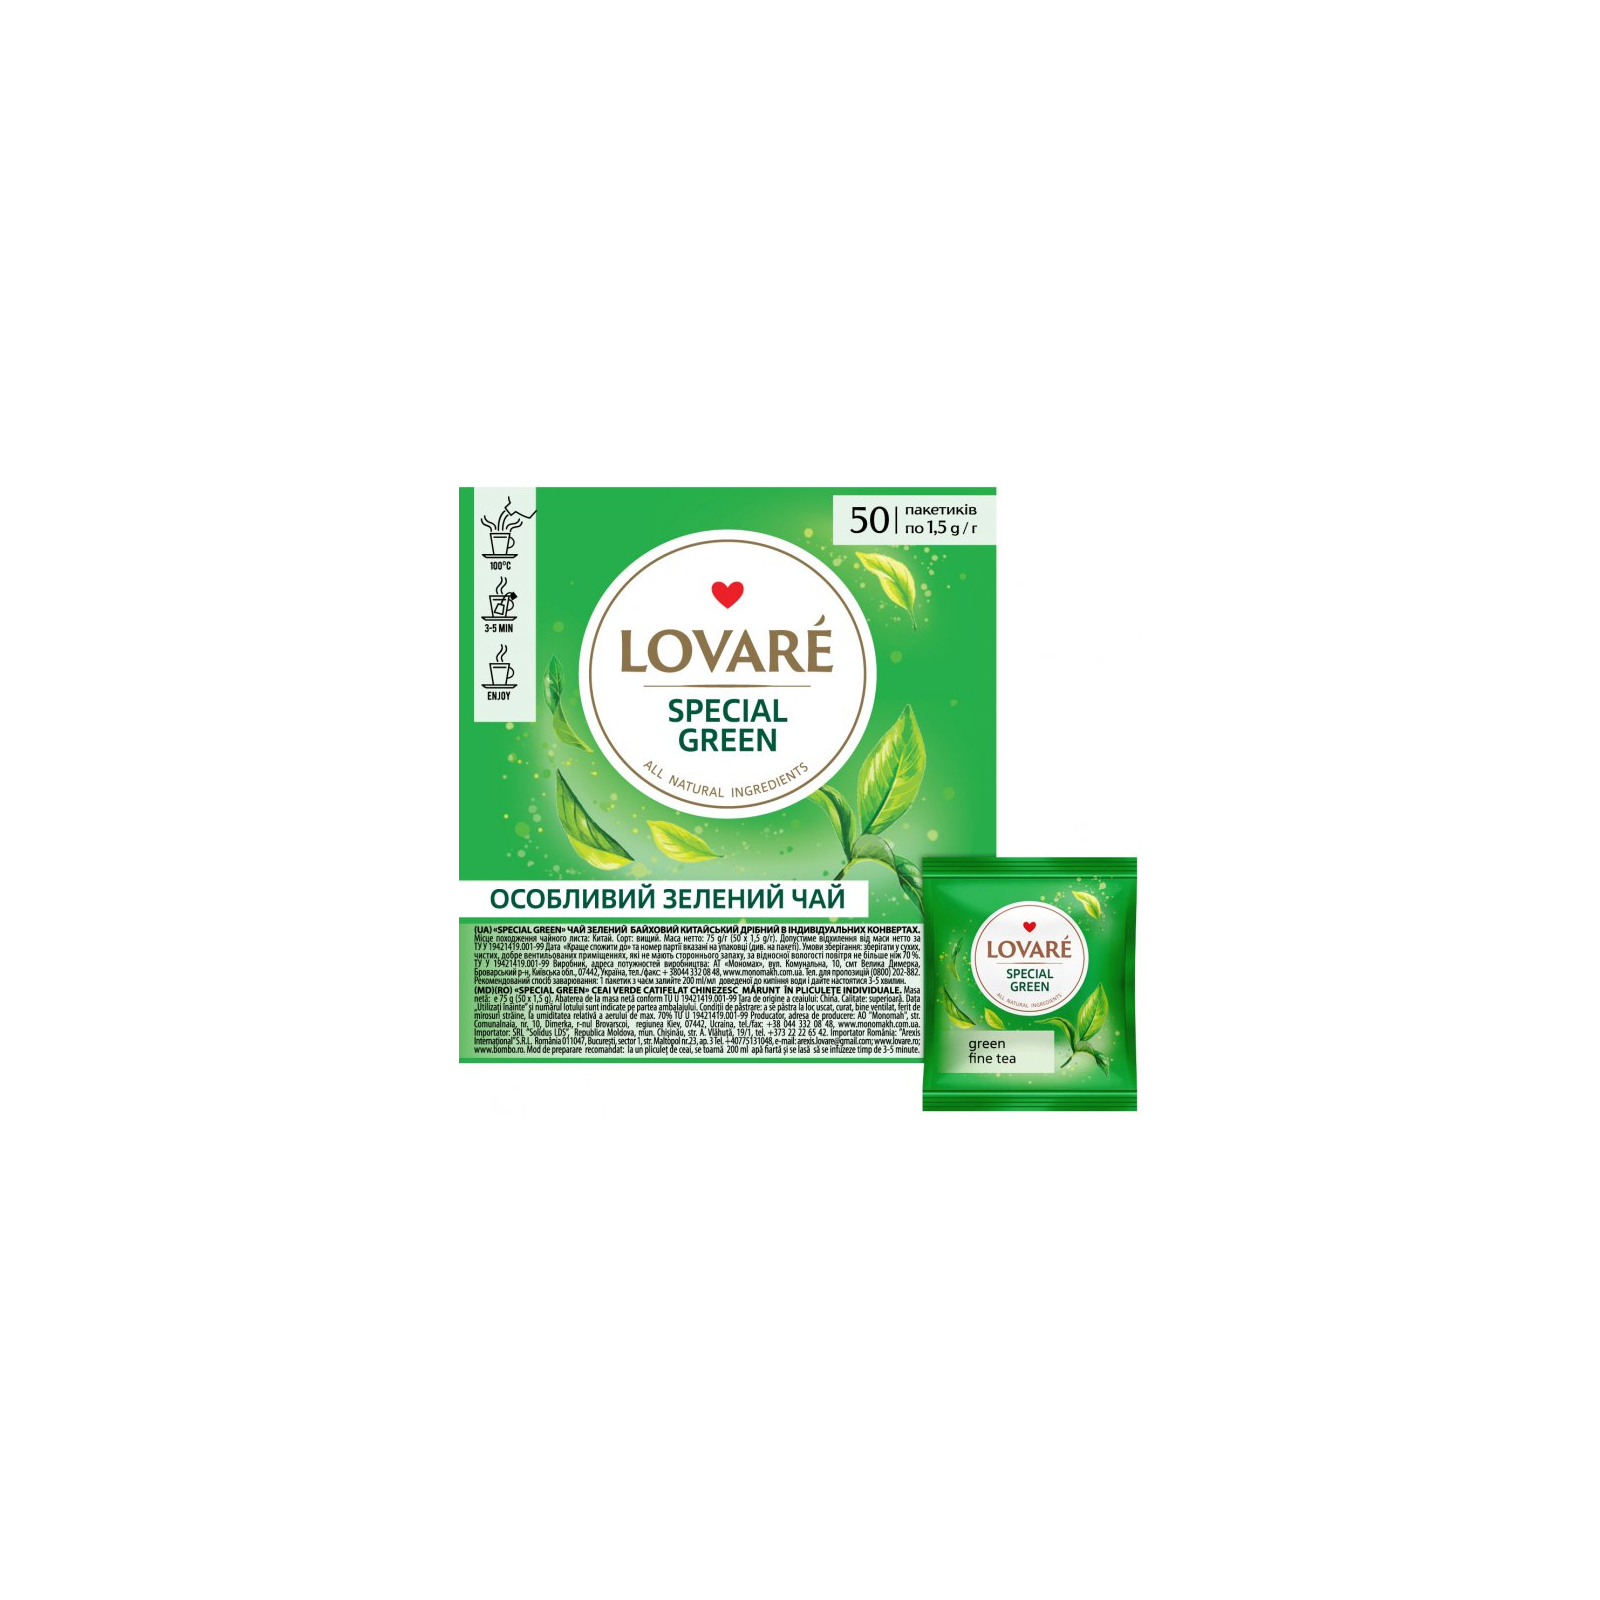 Чай Lovare "Special green" 50х1.5 г (lv.75459) изображение 2